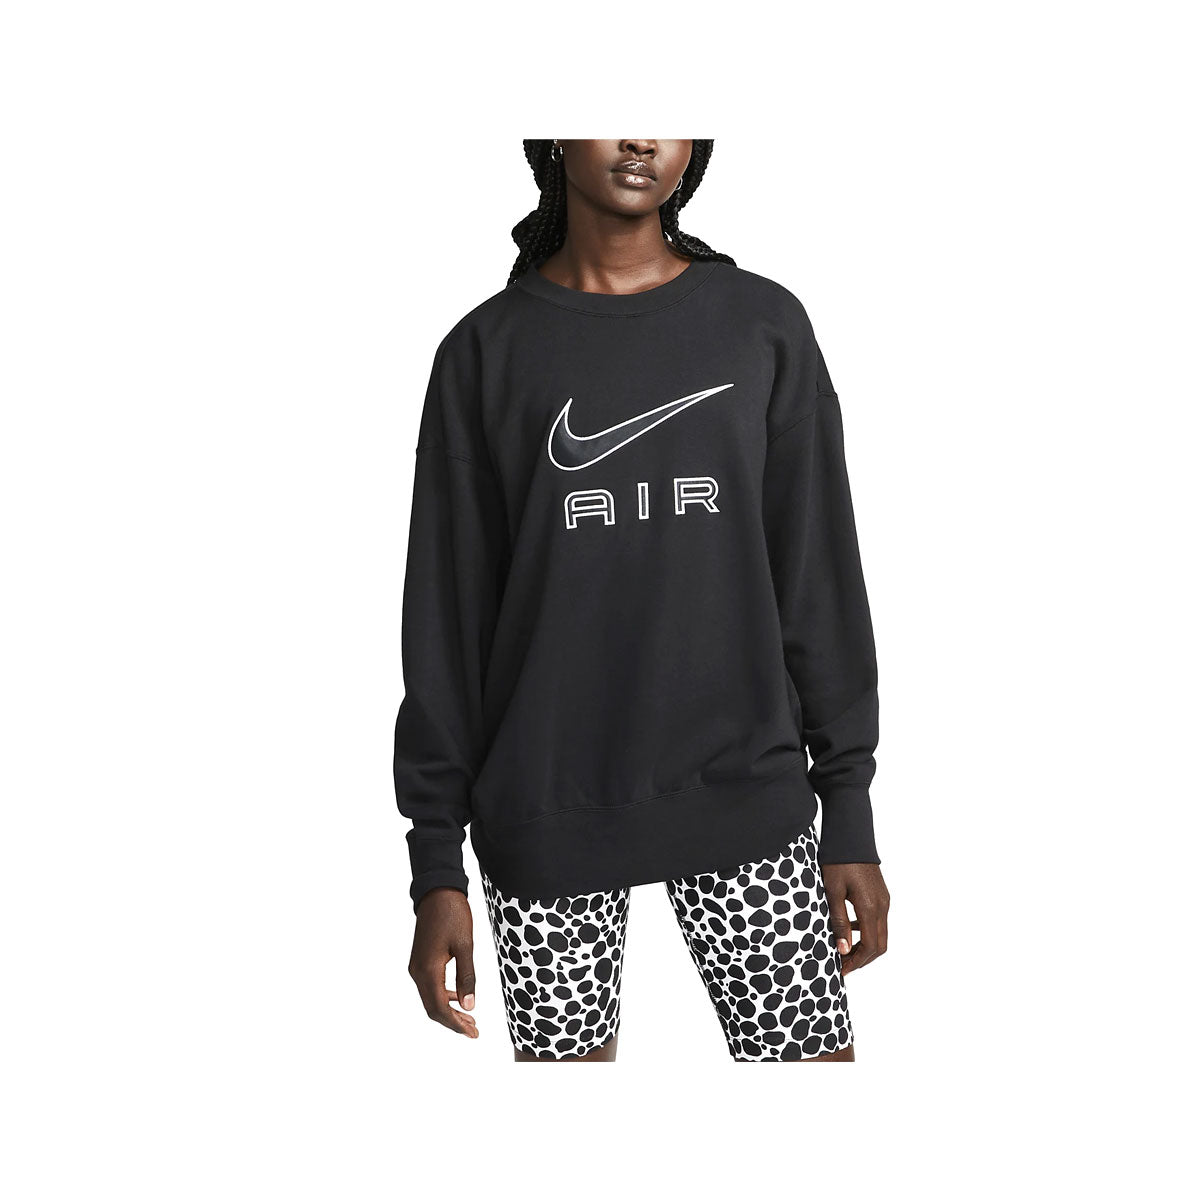 Nike Air Women's Fleece Crew Sweatshirt - KickzStore